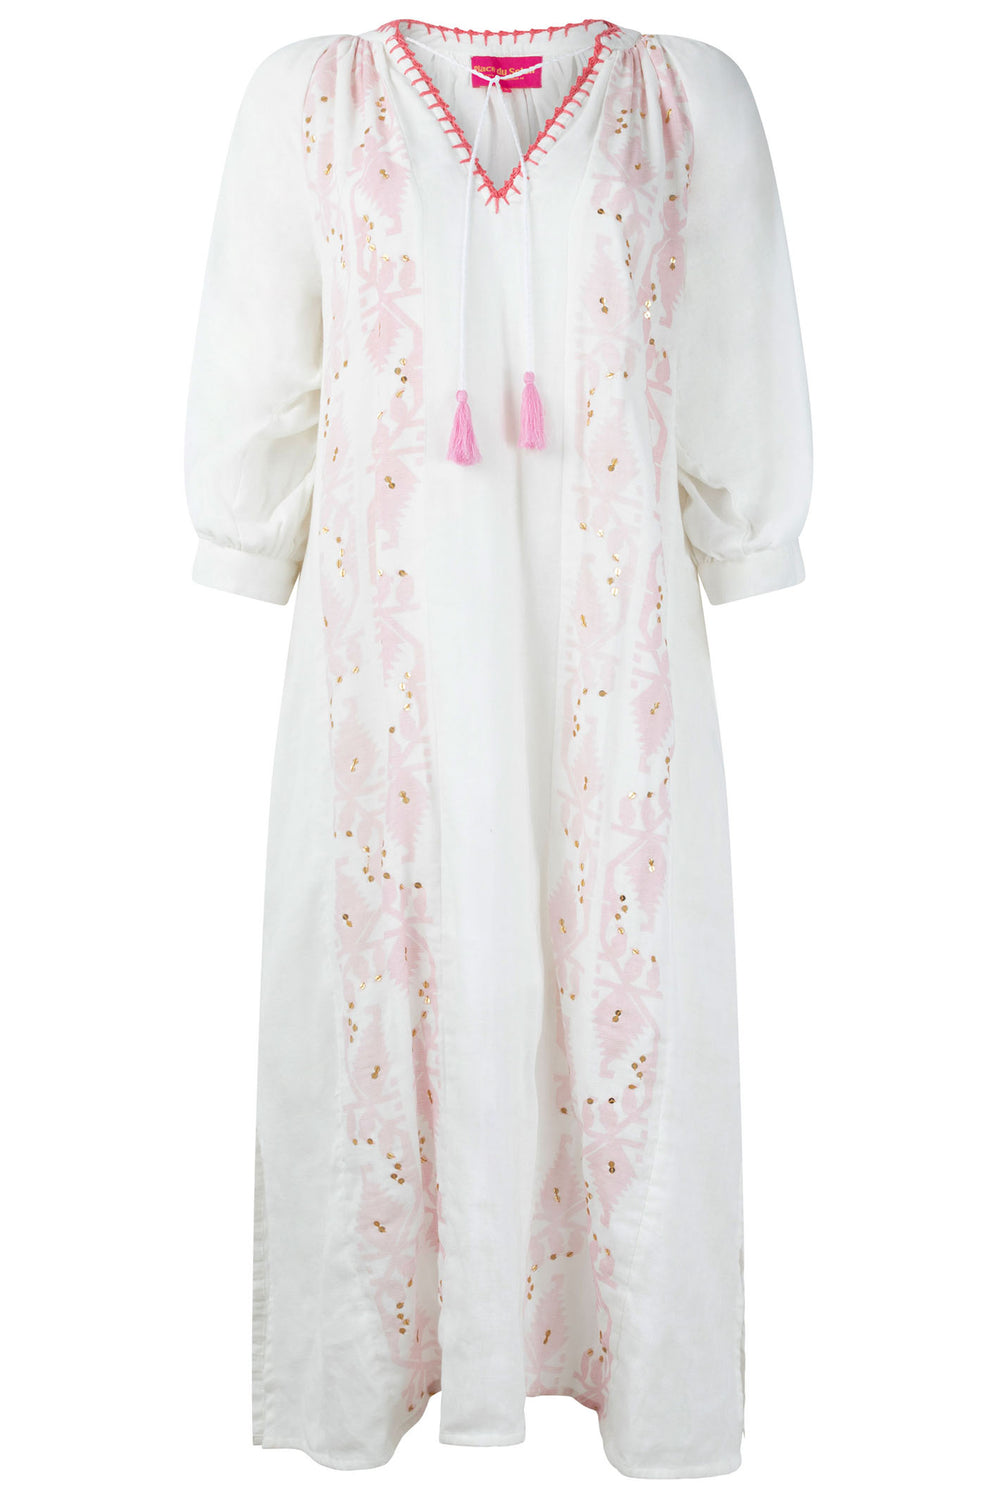 Place du Soleil S24 306 White Pink Ikat Print Long Dress - Olivia Grace Fashion